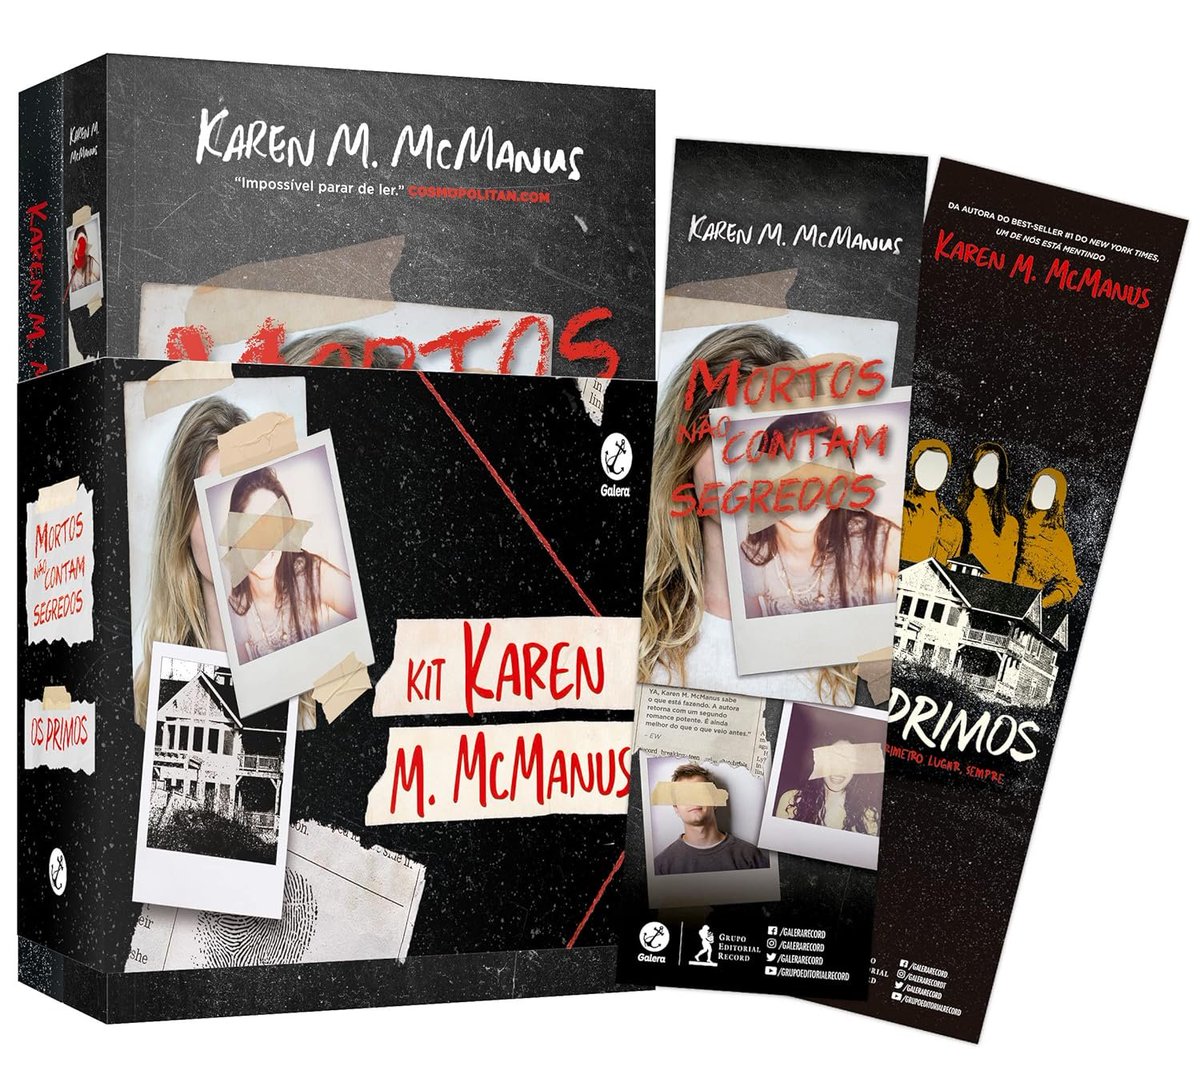 🚨 ÚLTIMAS HORAS! 🚨    
    
Semana do Consumidor  🧡  Amazon  
  
📚 Kit Cidade dos Fantasmas
💥 R$ 44,10
➡️ amzn.to/3VoQRV4
  
📚 Box Diários do Vampiro
💥 R$ 71,07
➡️ amzn.to/494Y3J4
  
📚 Kit Slammed
💥 R$ 59,19
➡️ amzn.to/3Vn9AAc
  
📚 Kit Karen M.